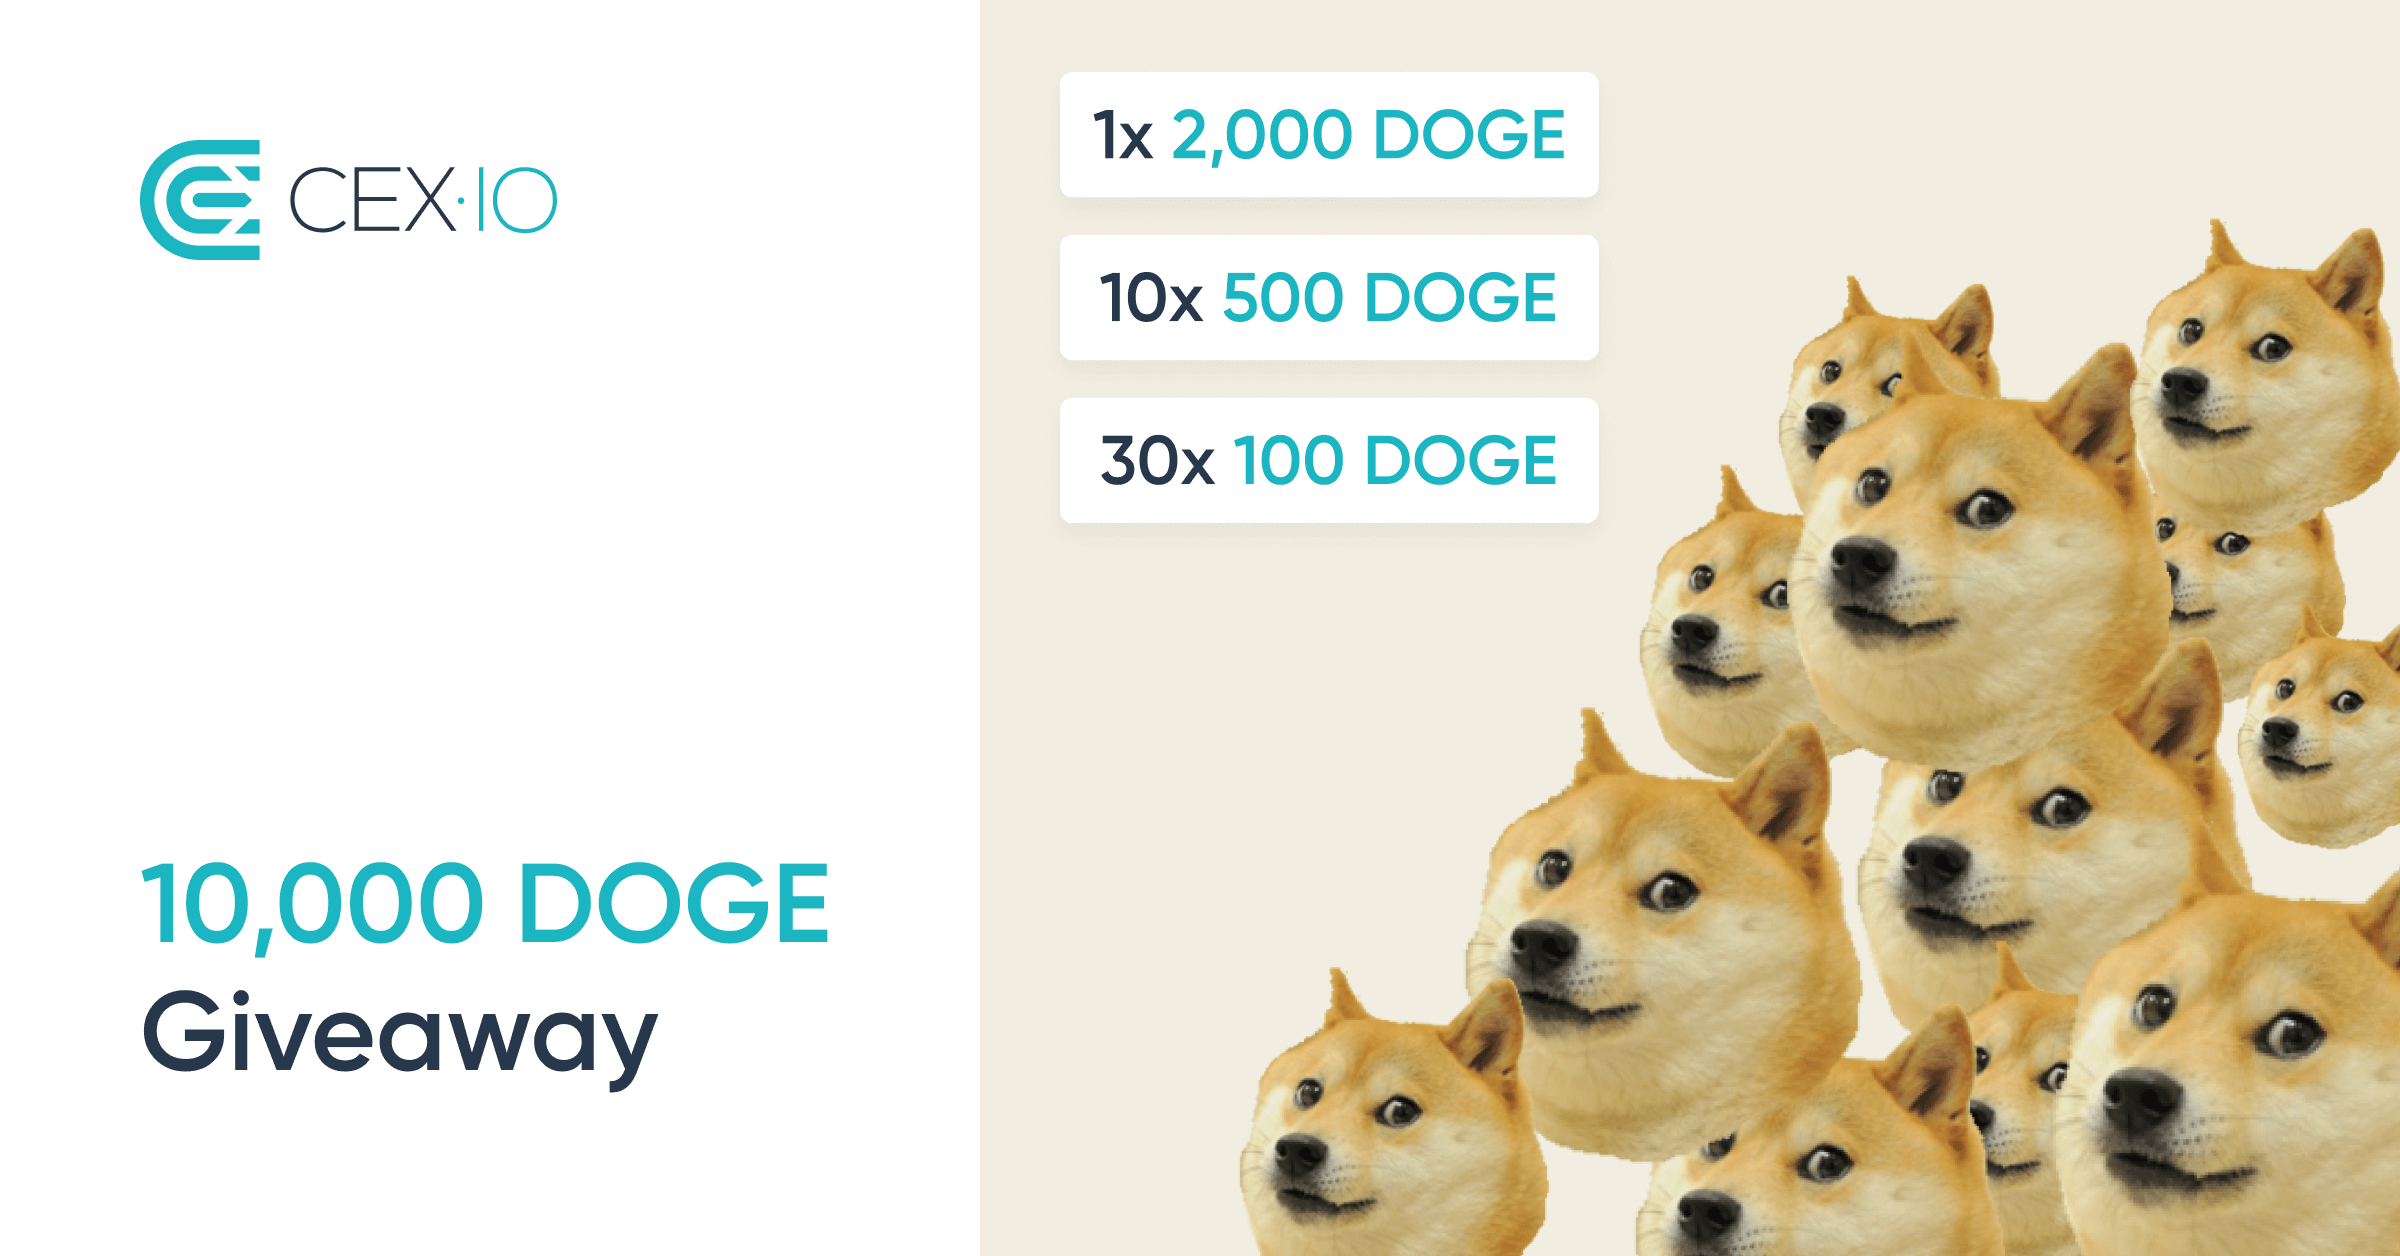 10,000 DOGE GIVEAWAY